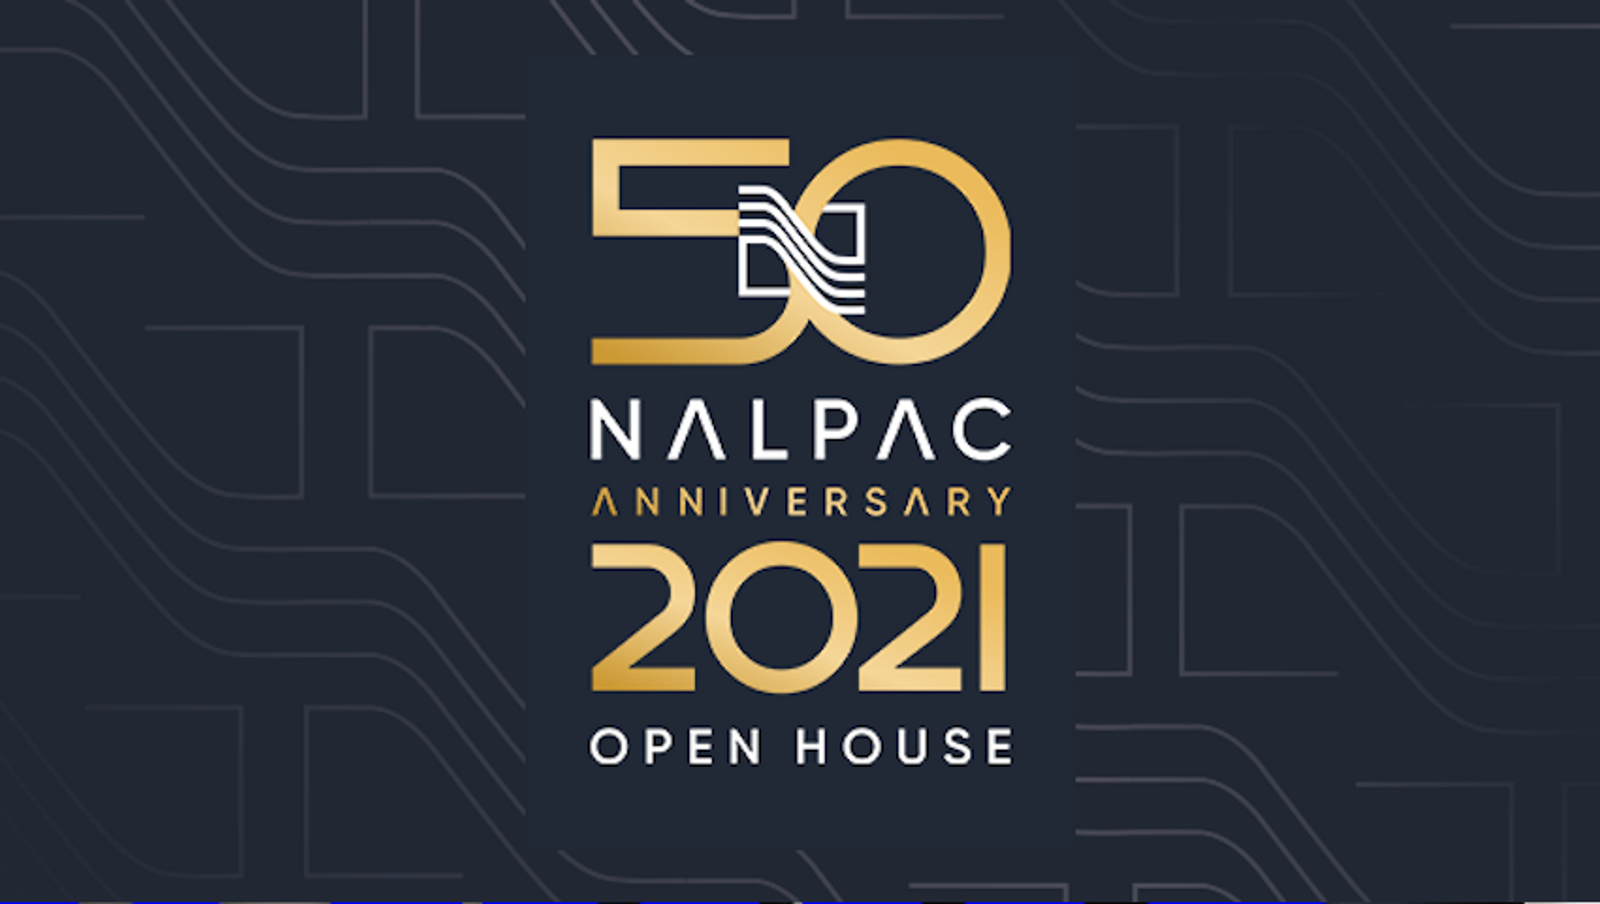 Nalpac to Host Virtual Open House, Celebrate 50th Anniversary